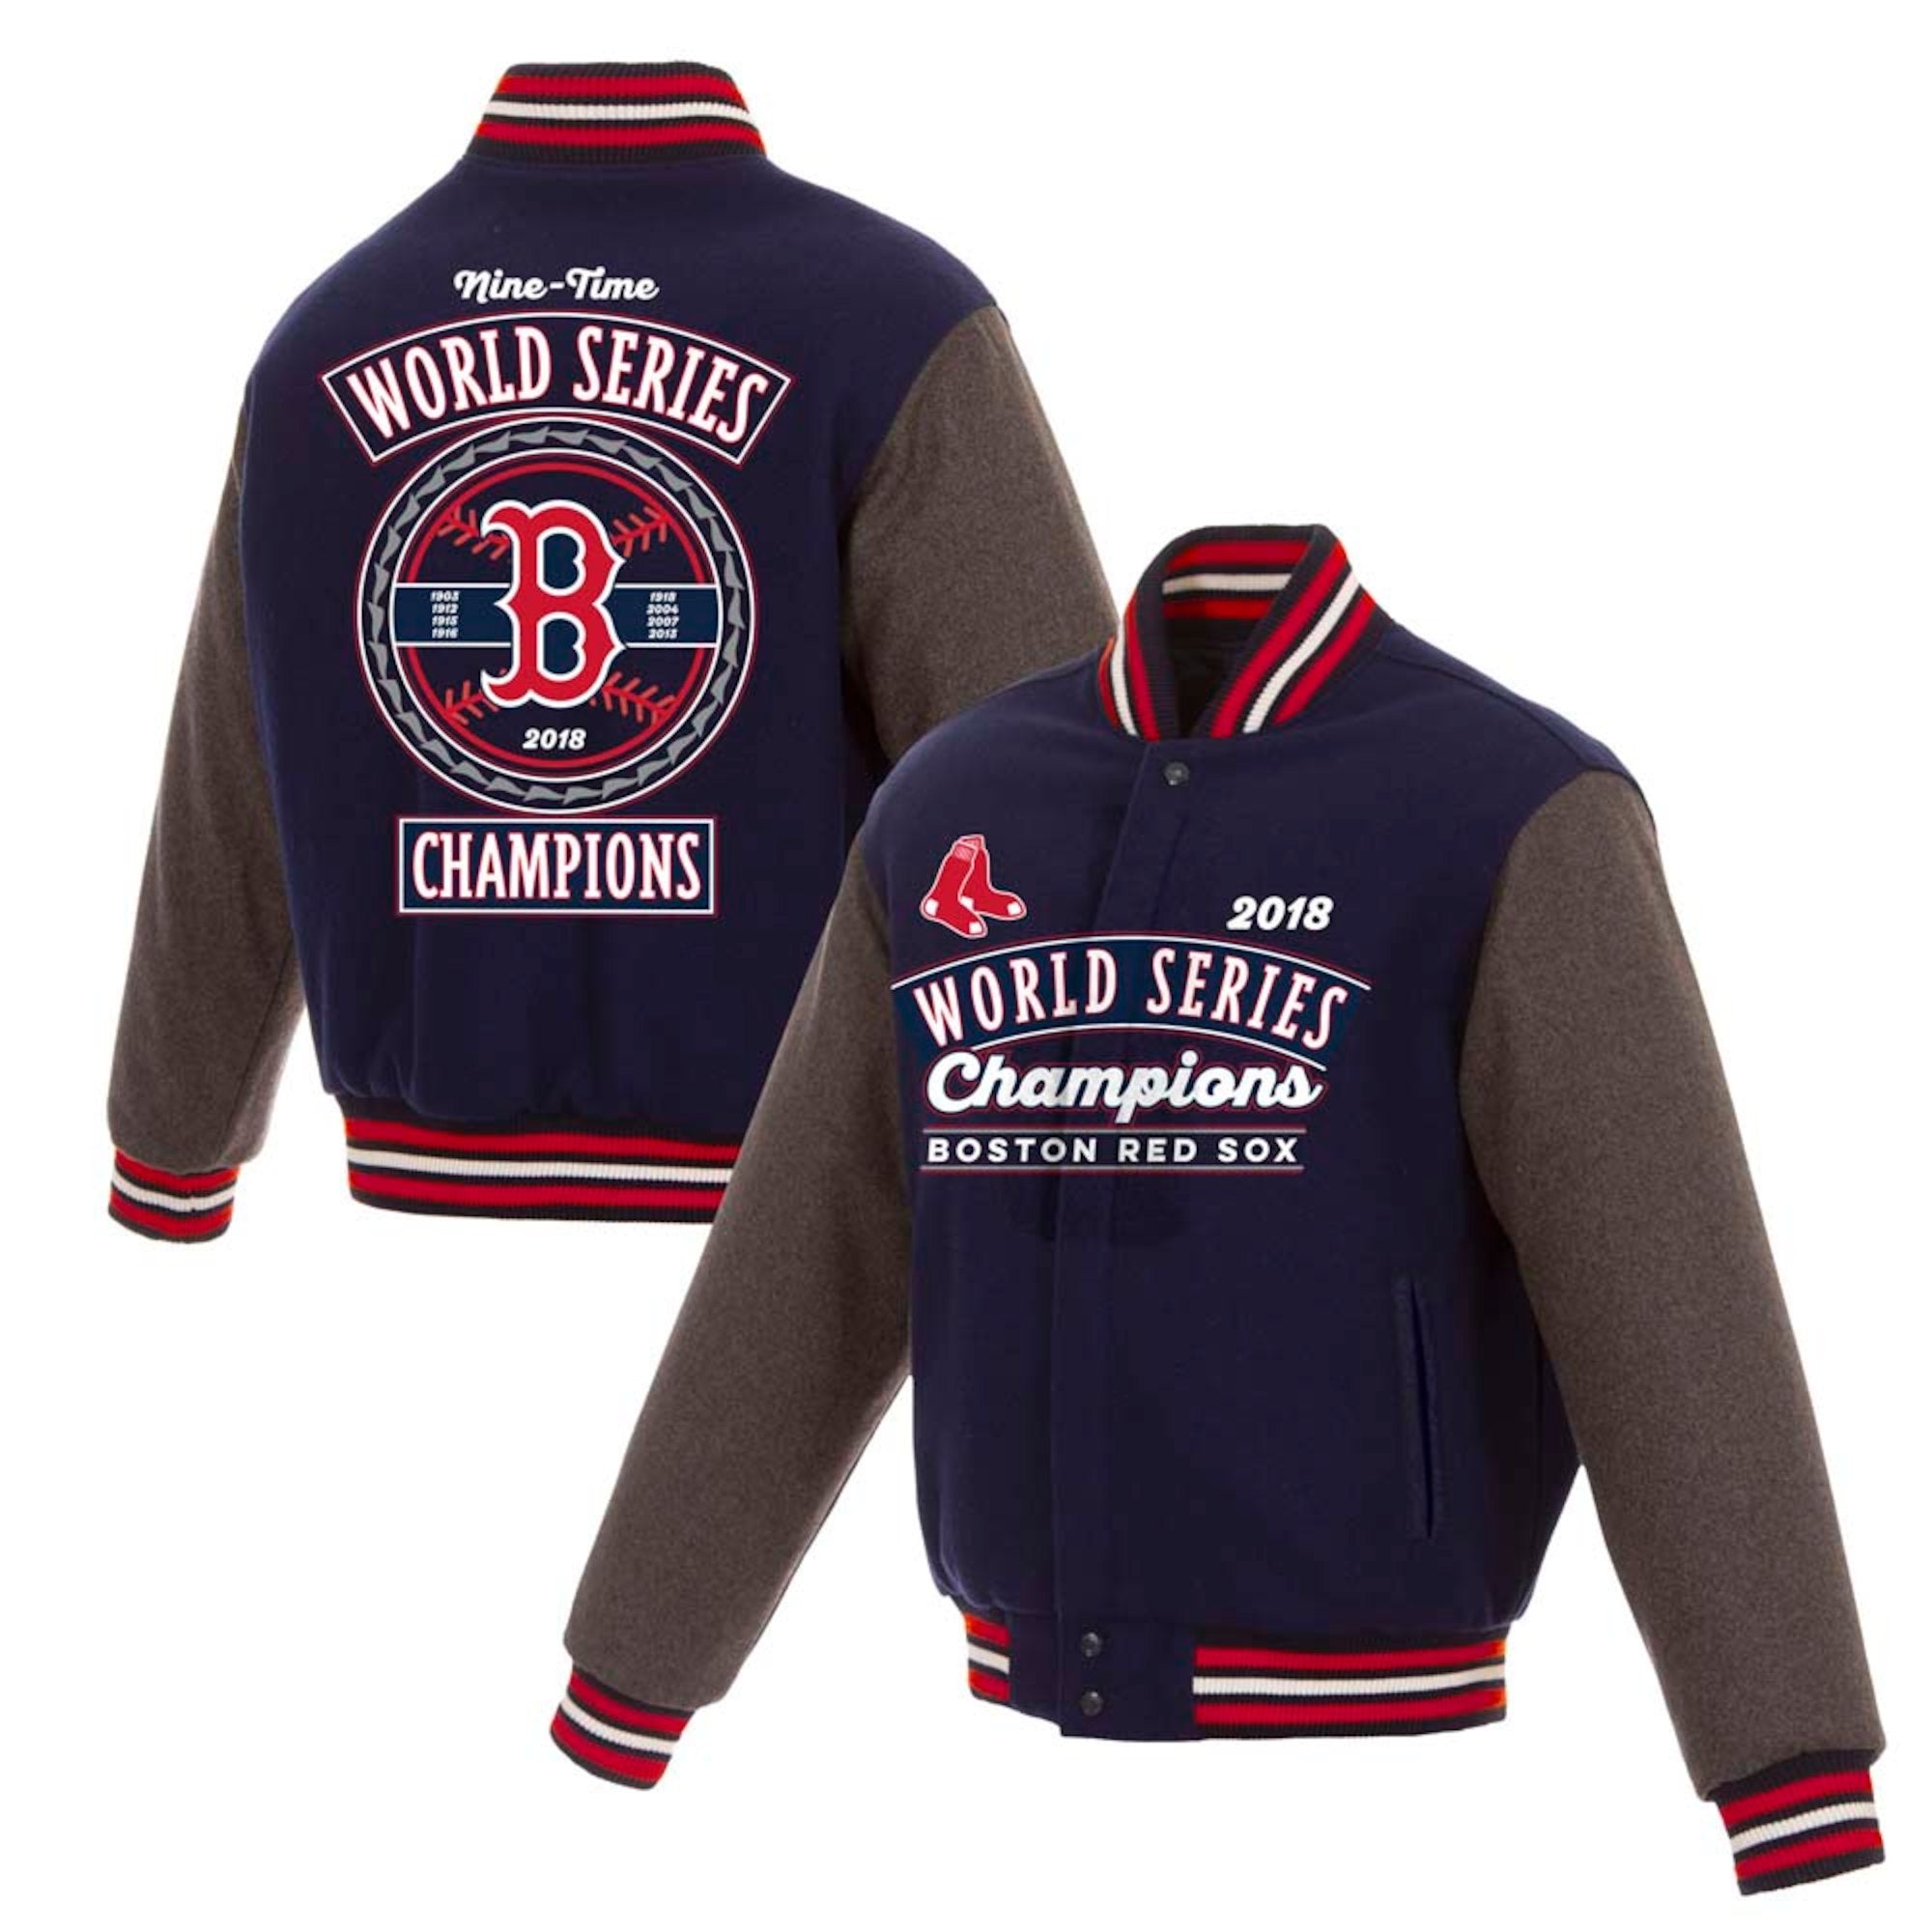 St. Louis Cardinals / World Series Champions - MLB Wool Reversible Jacket